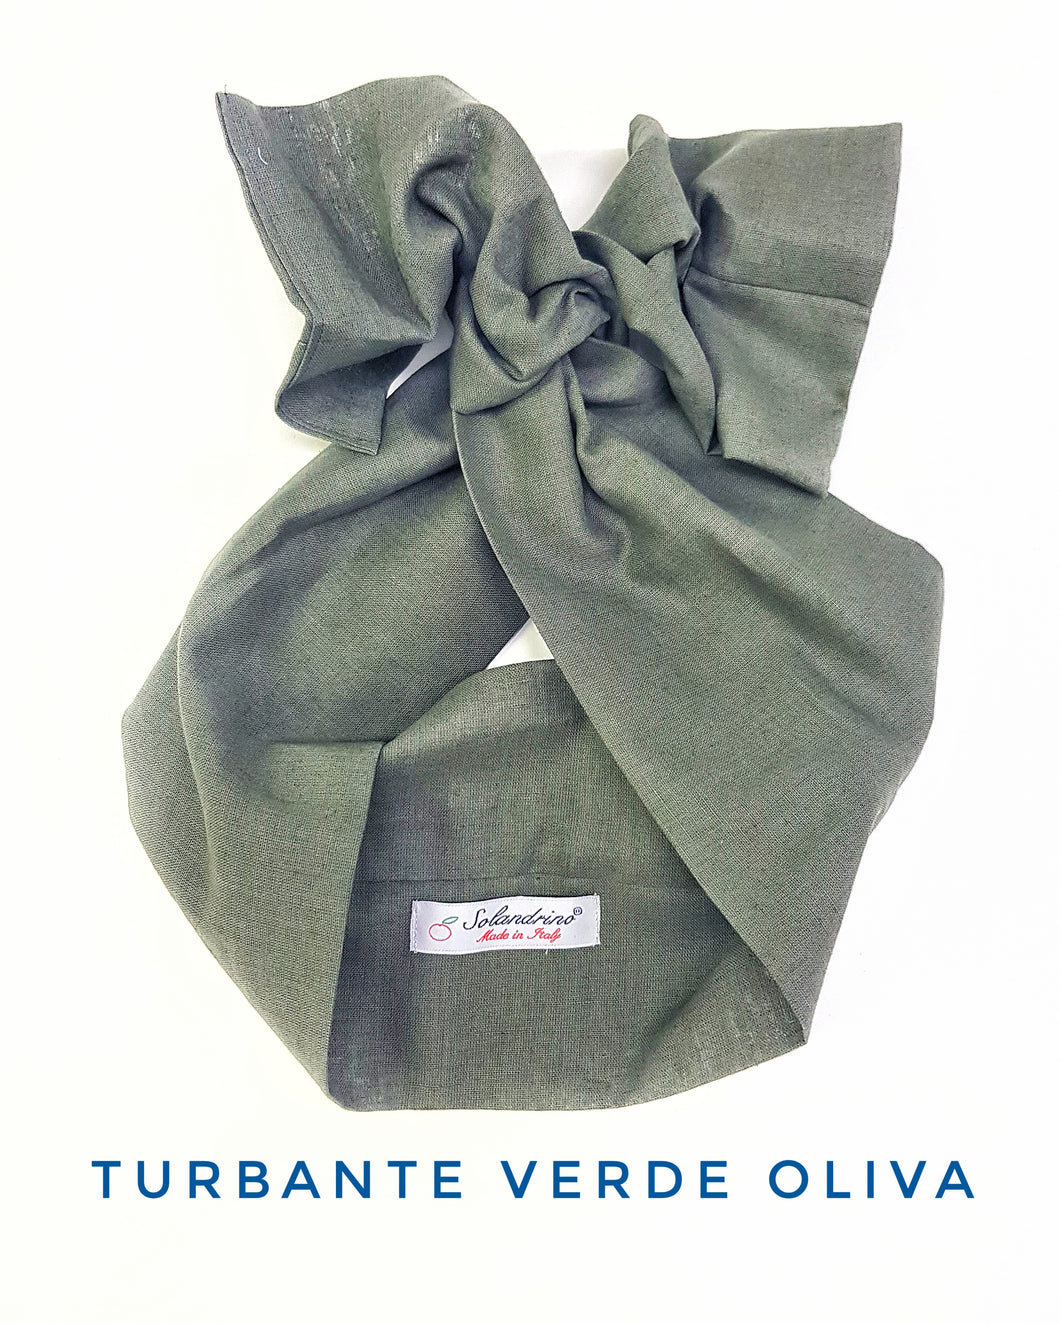 Turbante verde oliva in lino made in Italy fascia capelli hairband